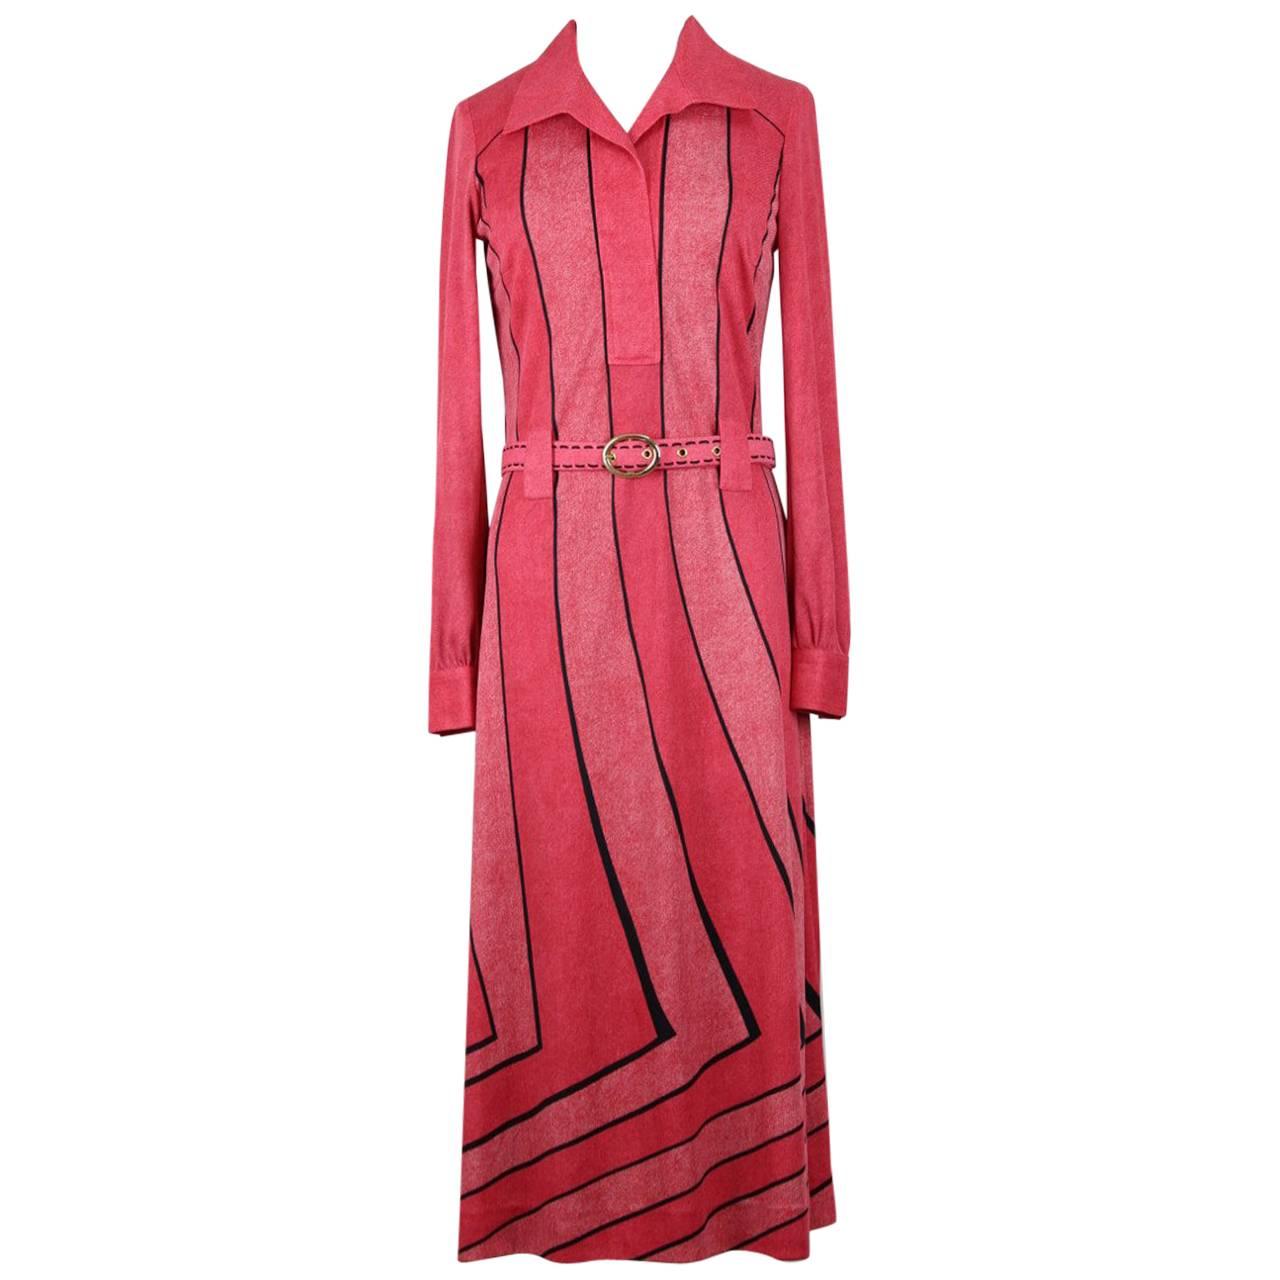 1970s Roberta di Camerino “Gabbiano“ Pink Trompe l'Oeil Print Belted Dress For Sale